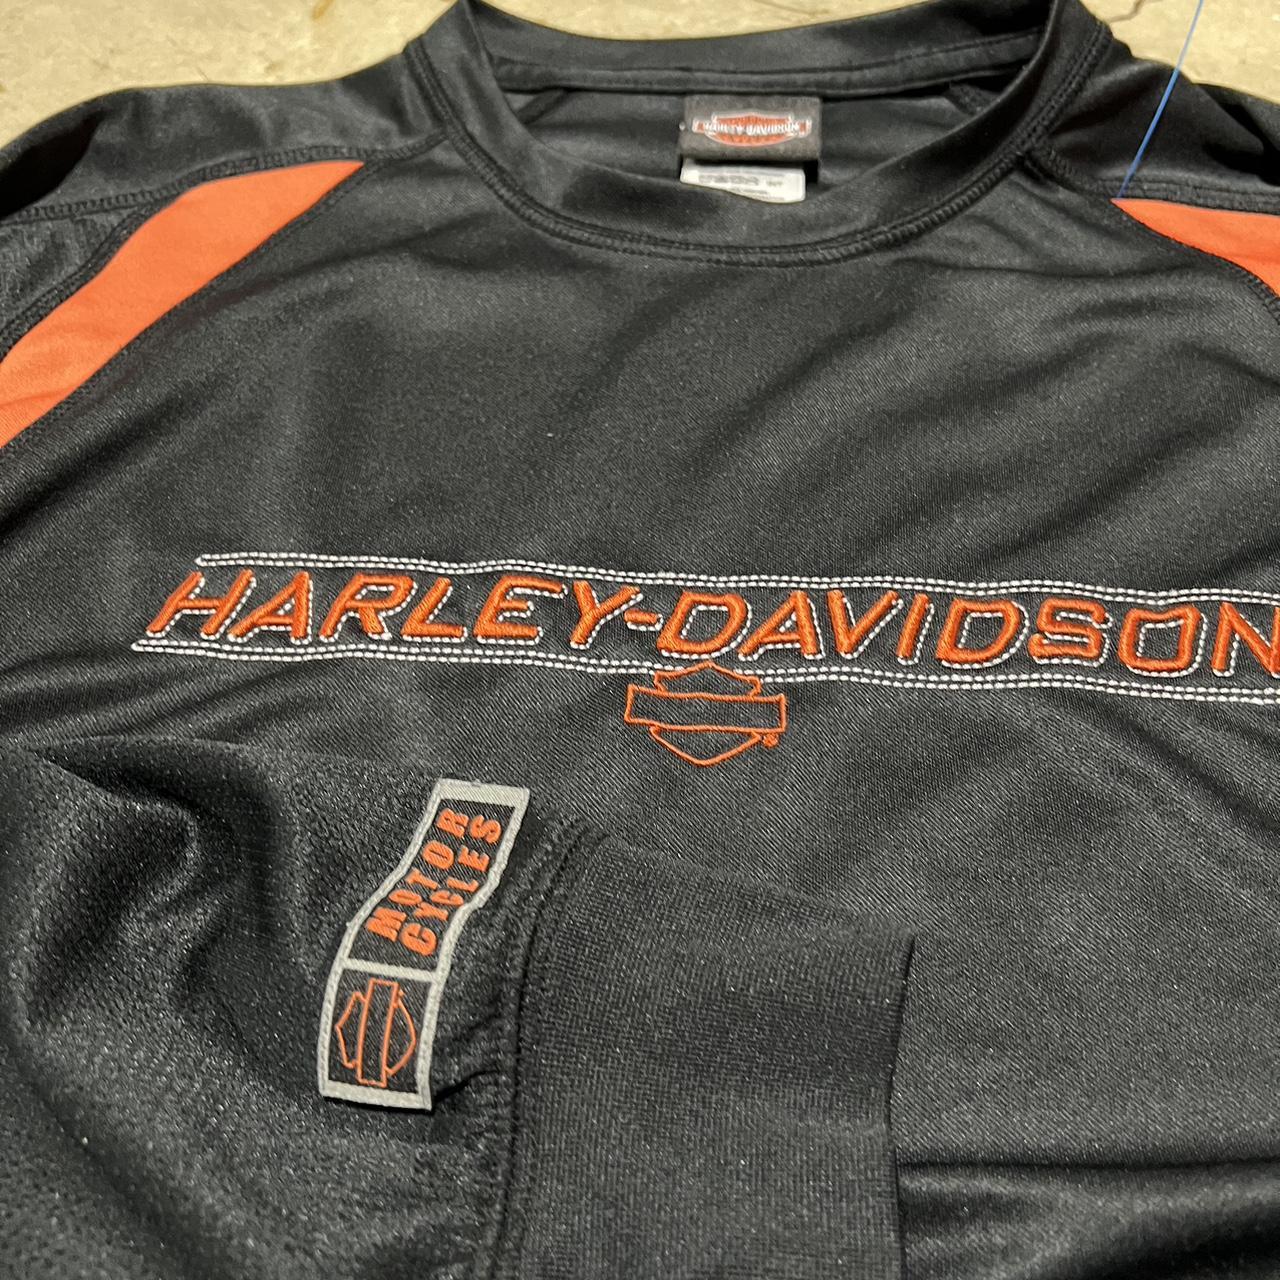 Harley Davidson Men's Black and Orange T-shirt (2)